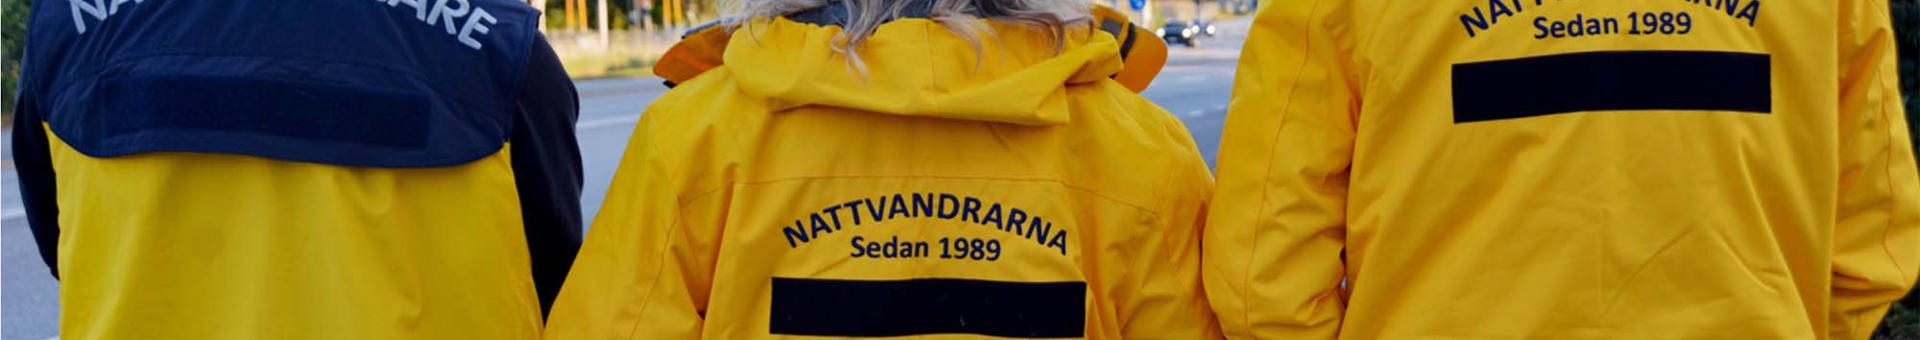 Targetaid Nattvandrarna I Sverige Hero 2000X1100.Jpeg (1)